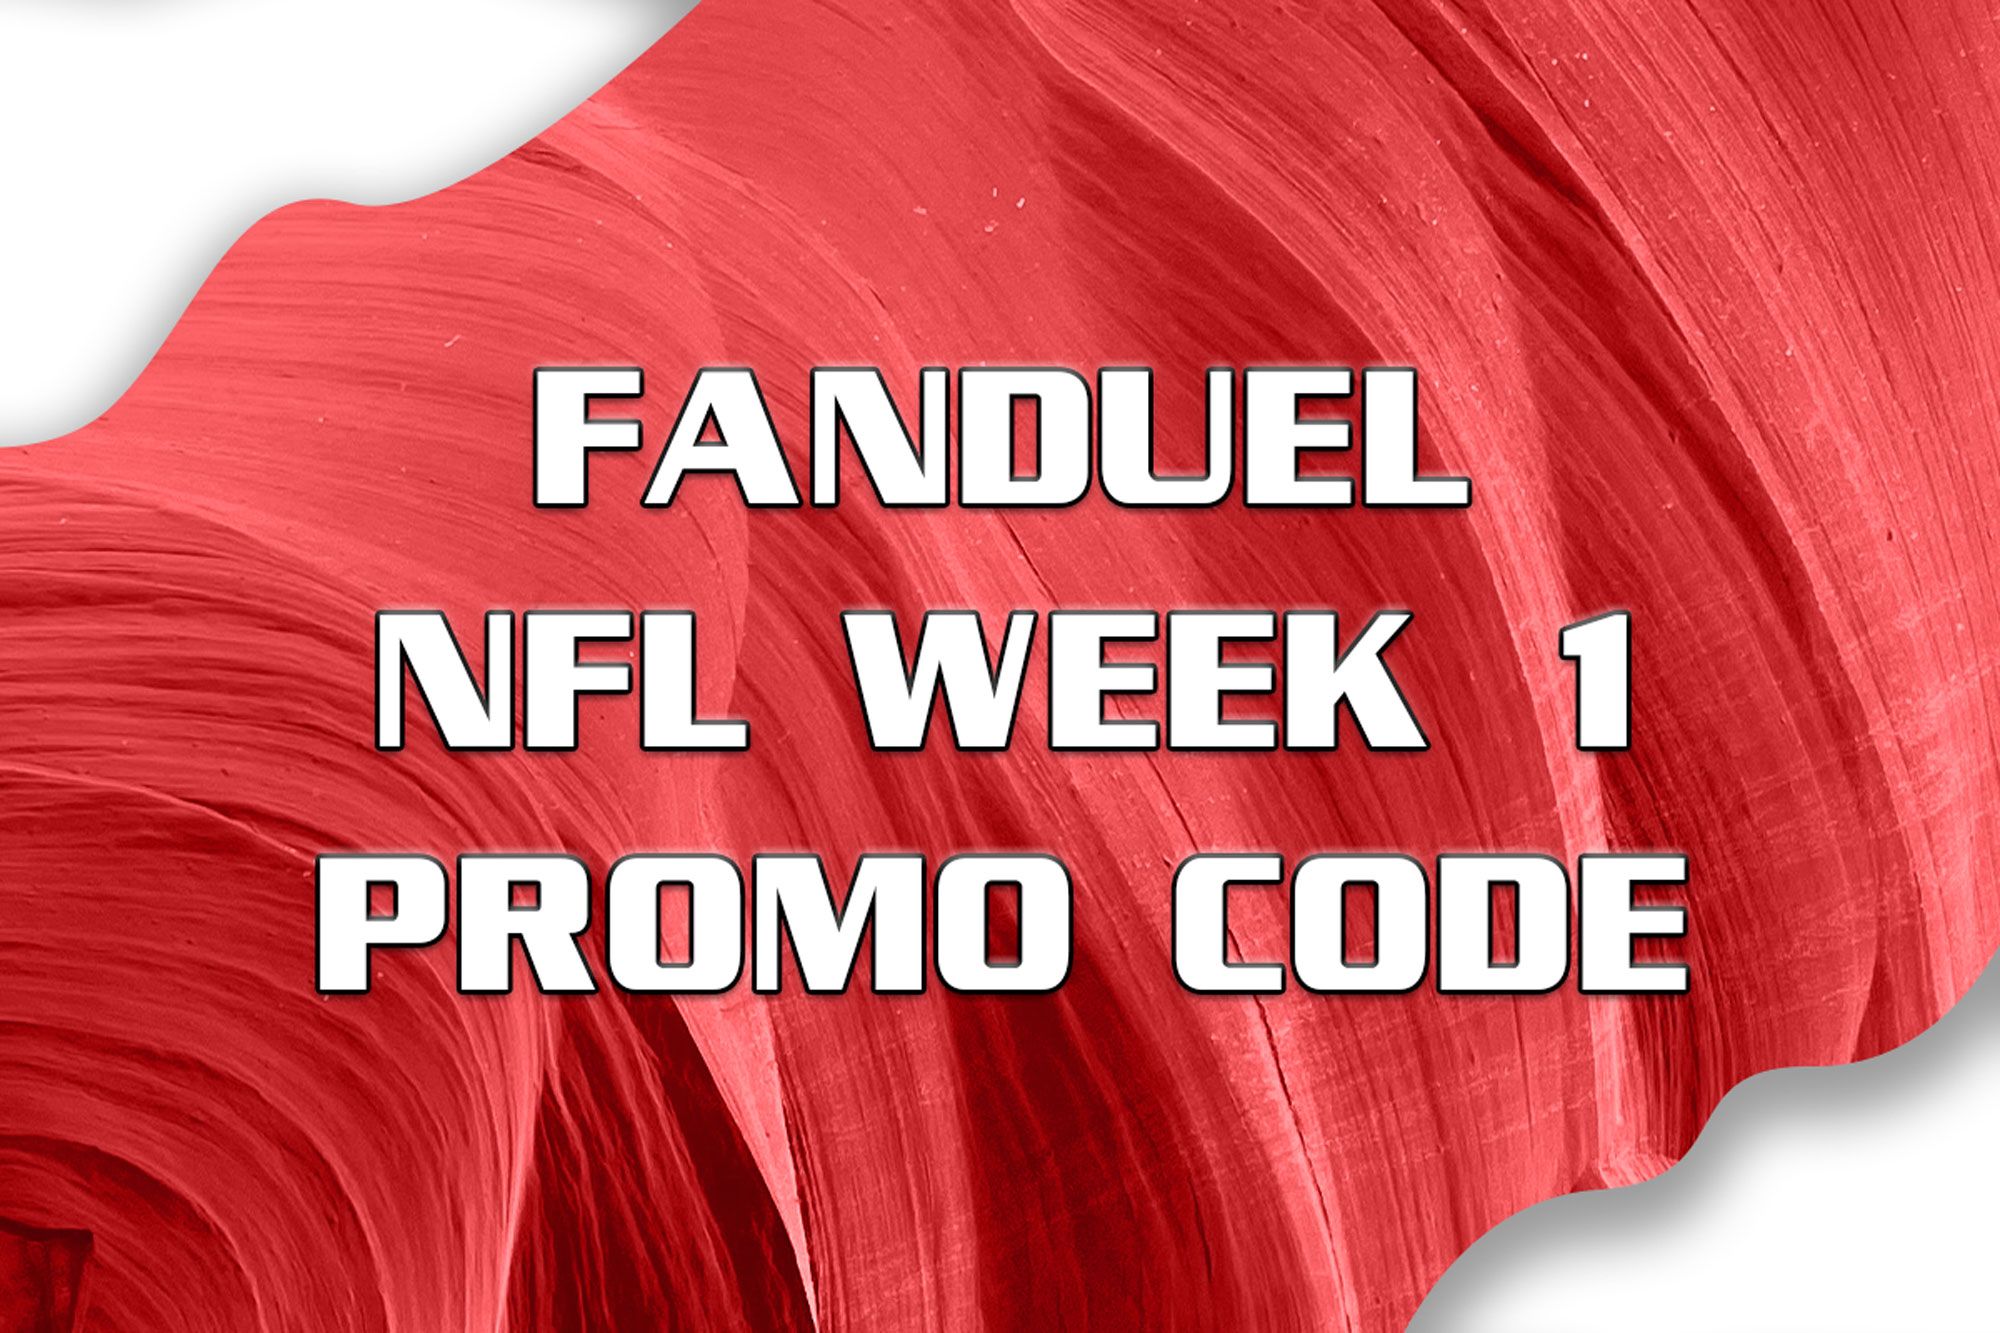 FanDuel promo code: With NFL kickoff looming, get $300 in total bonus value  